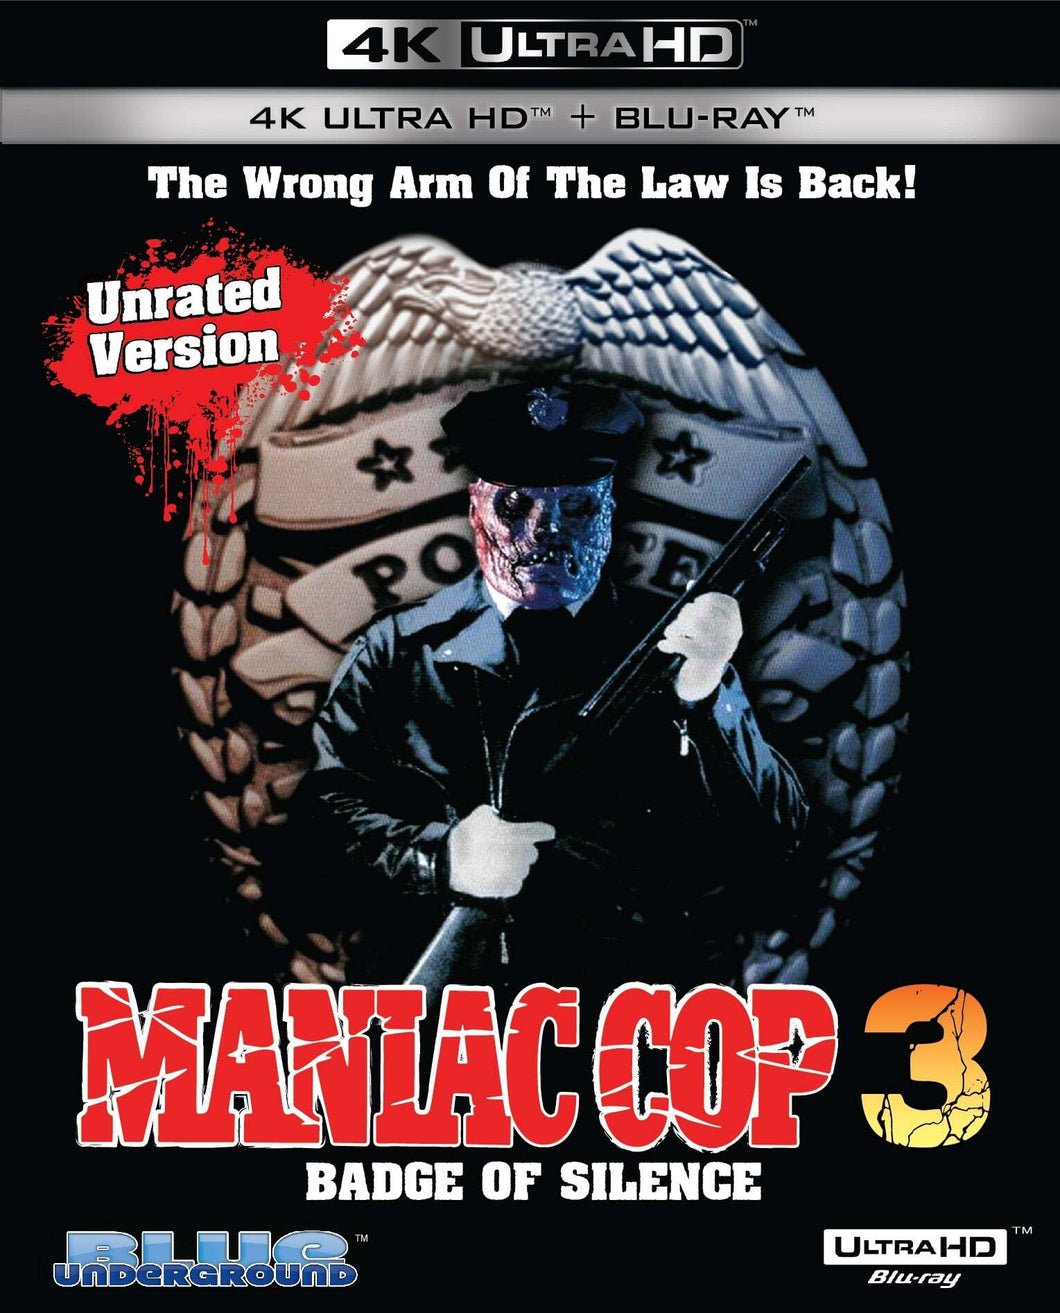 Maniac Cop 3: Badge of Silence 4K (1993) de William Lustig - front cover